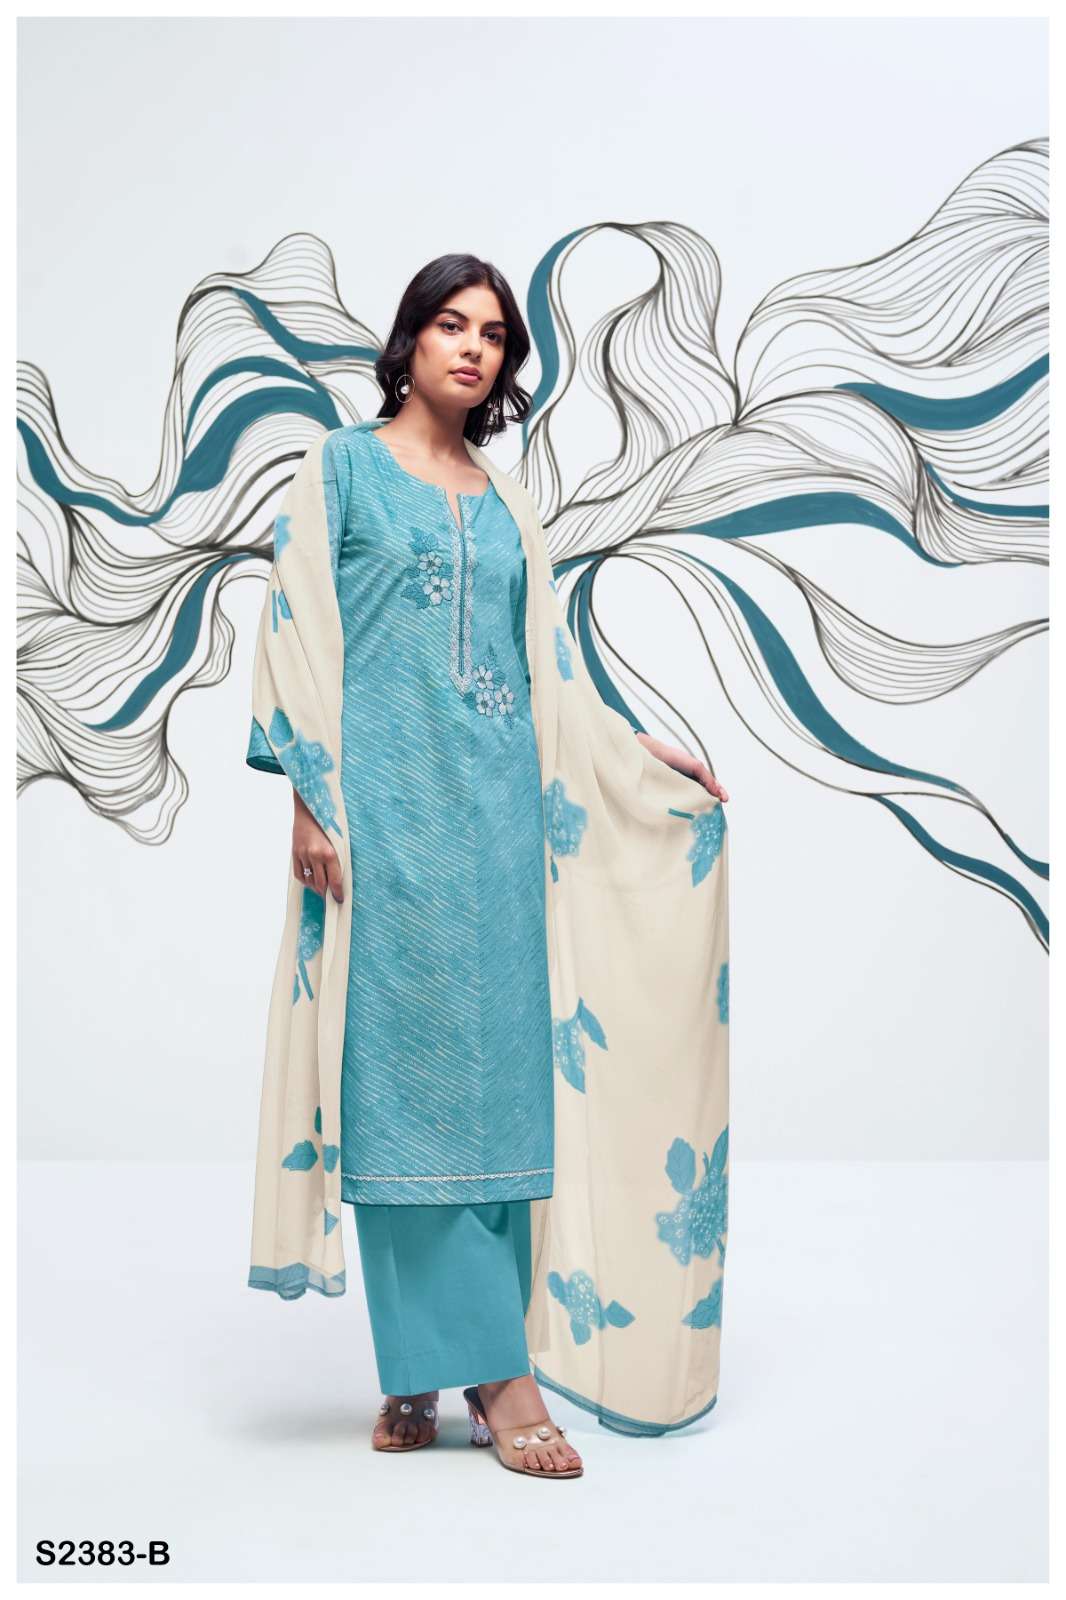 Ganga MALEAH 2383 Dress Materials Wholesale catalog